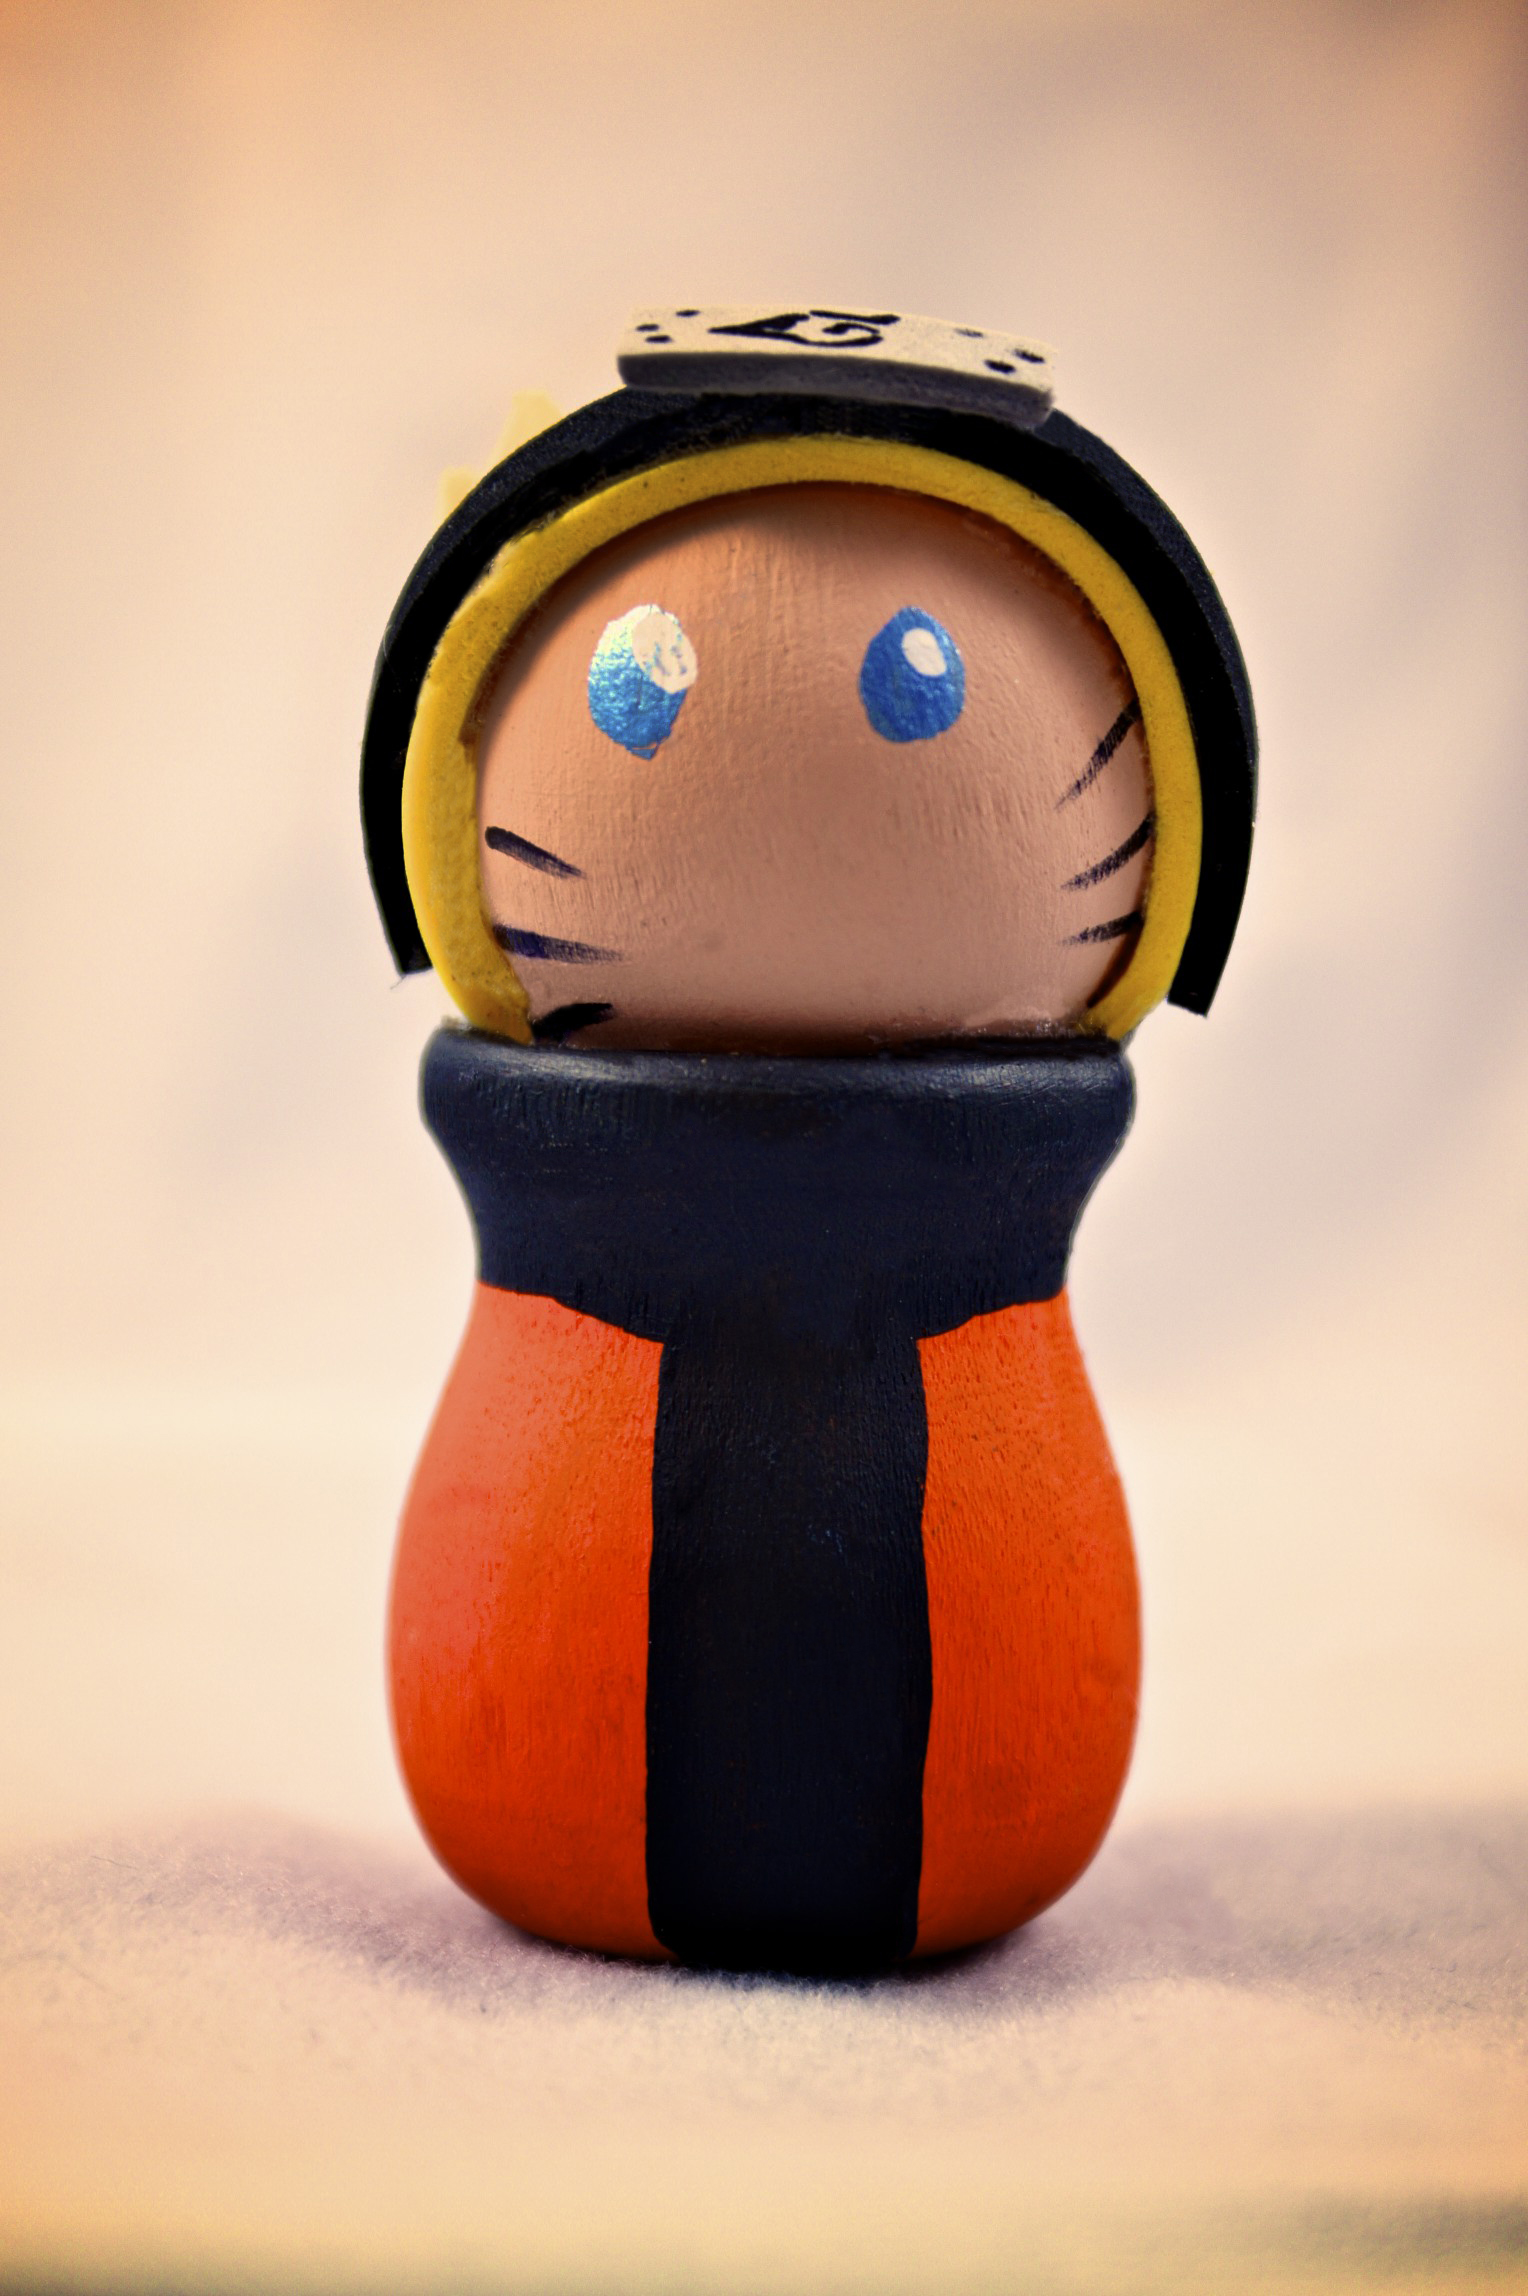 Naruto wobble doll.